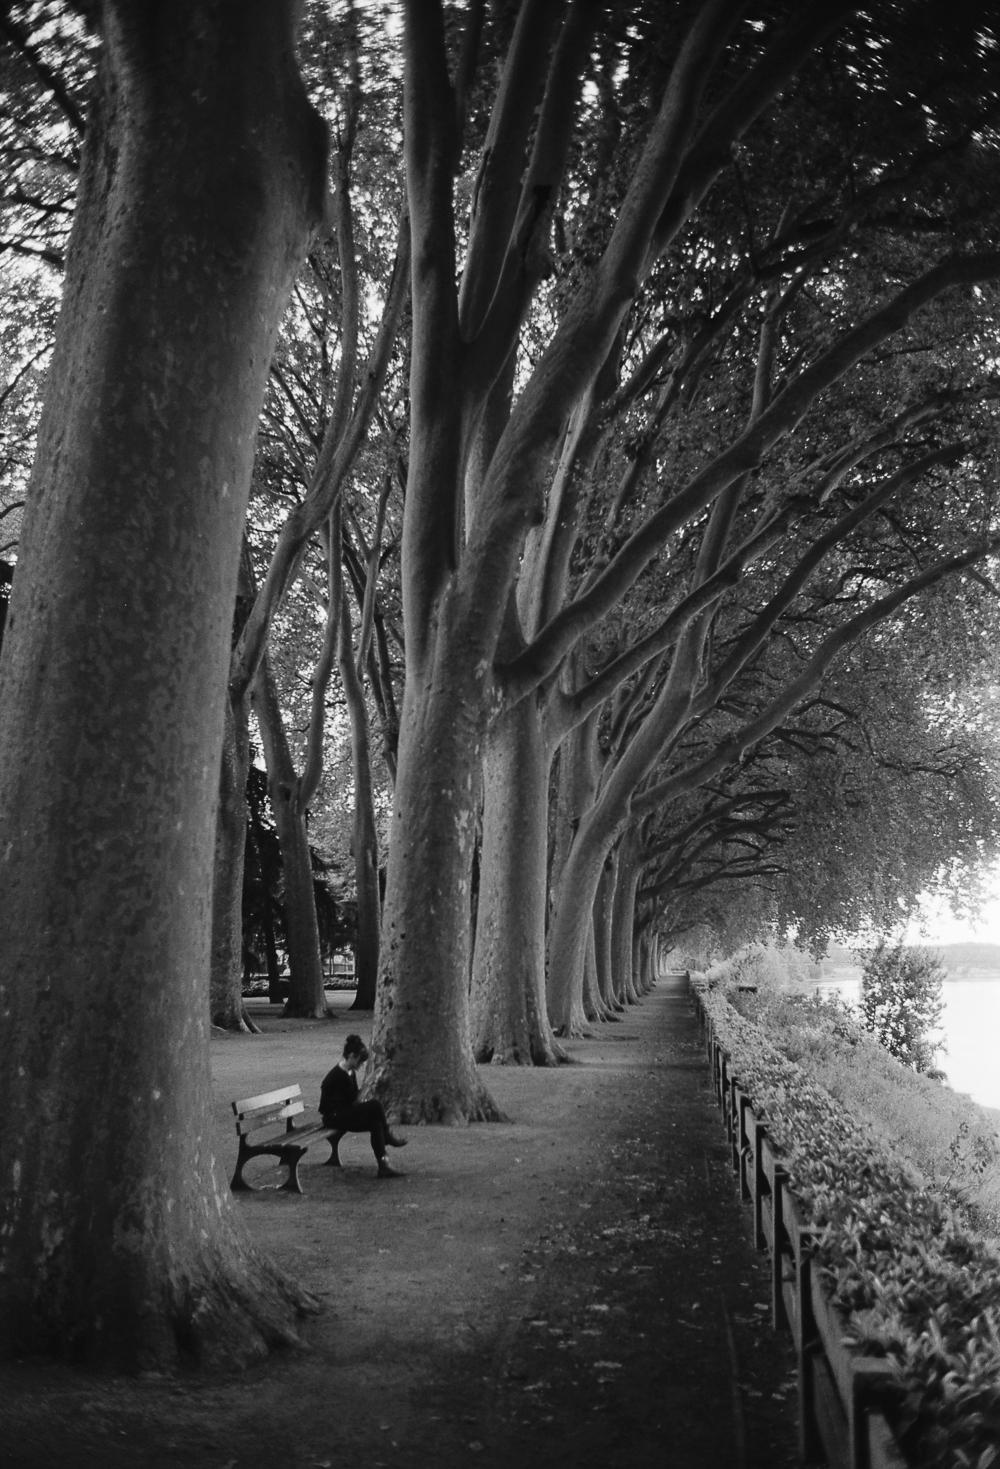 Edition 5/10 - Treeline, Chinon, France, Silver Gelatin Photograph